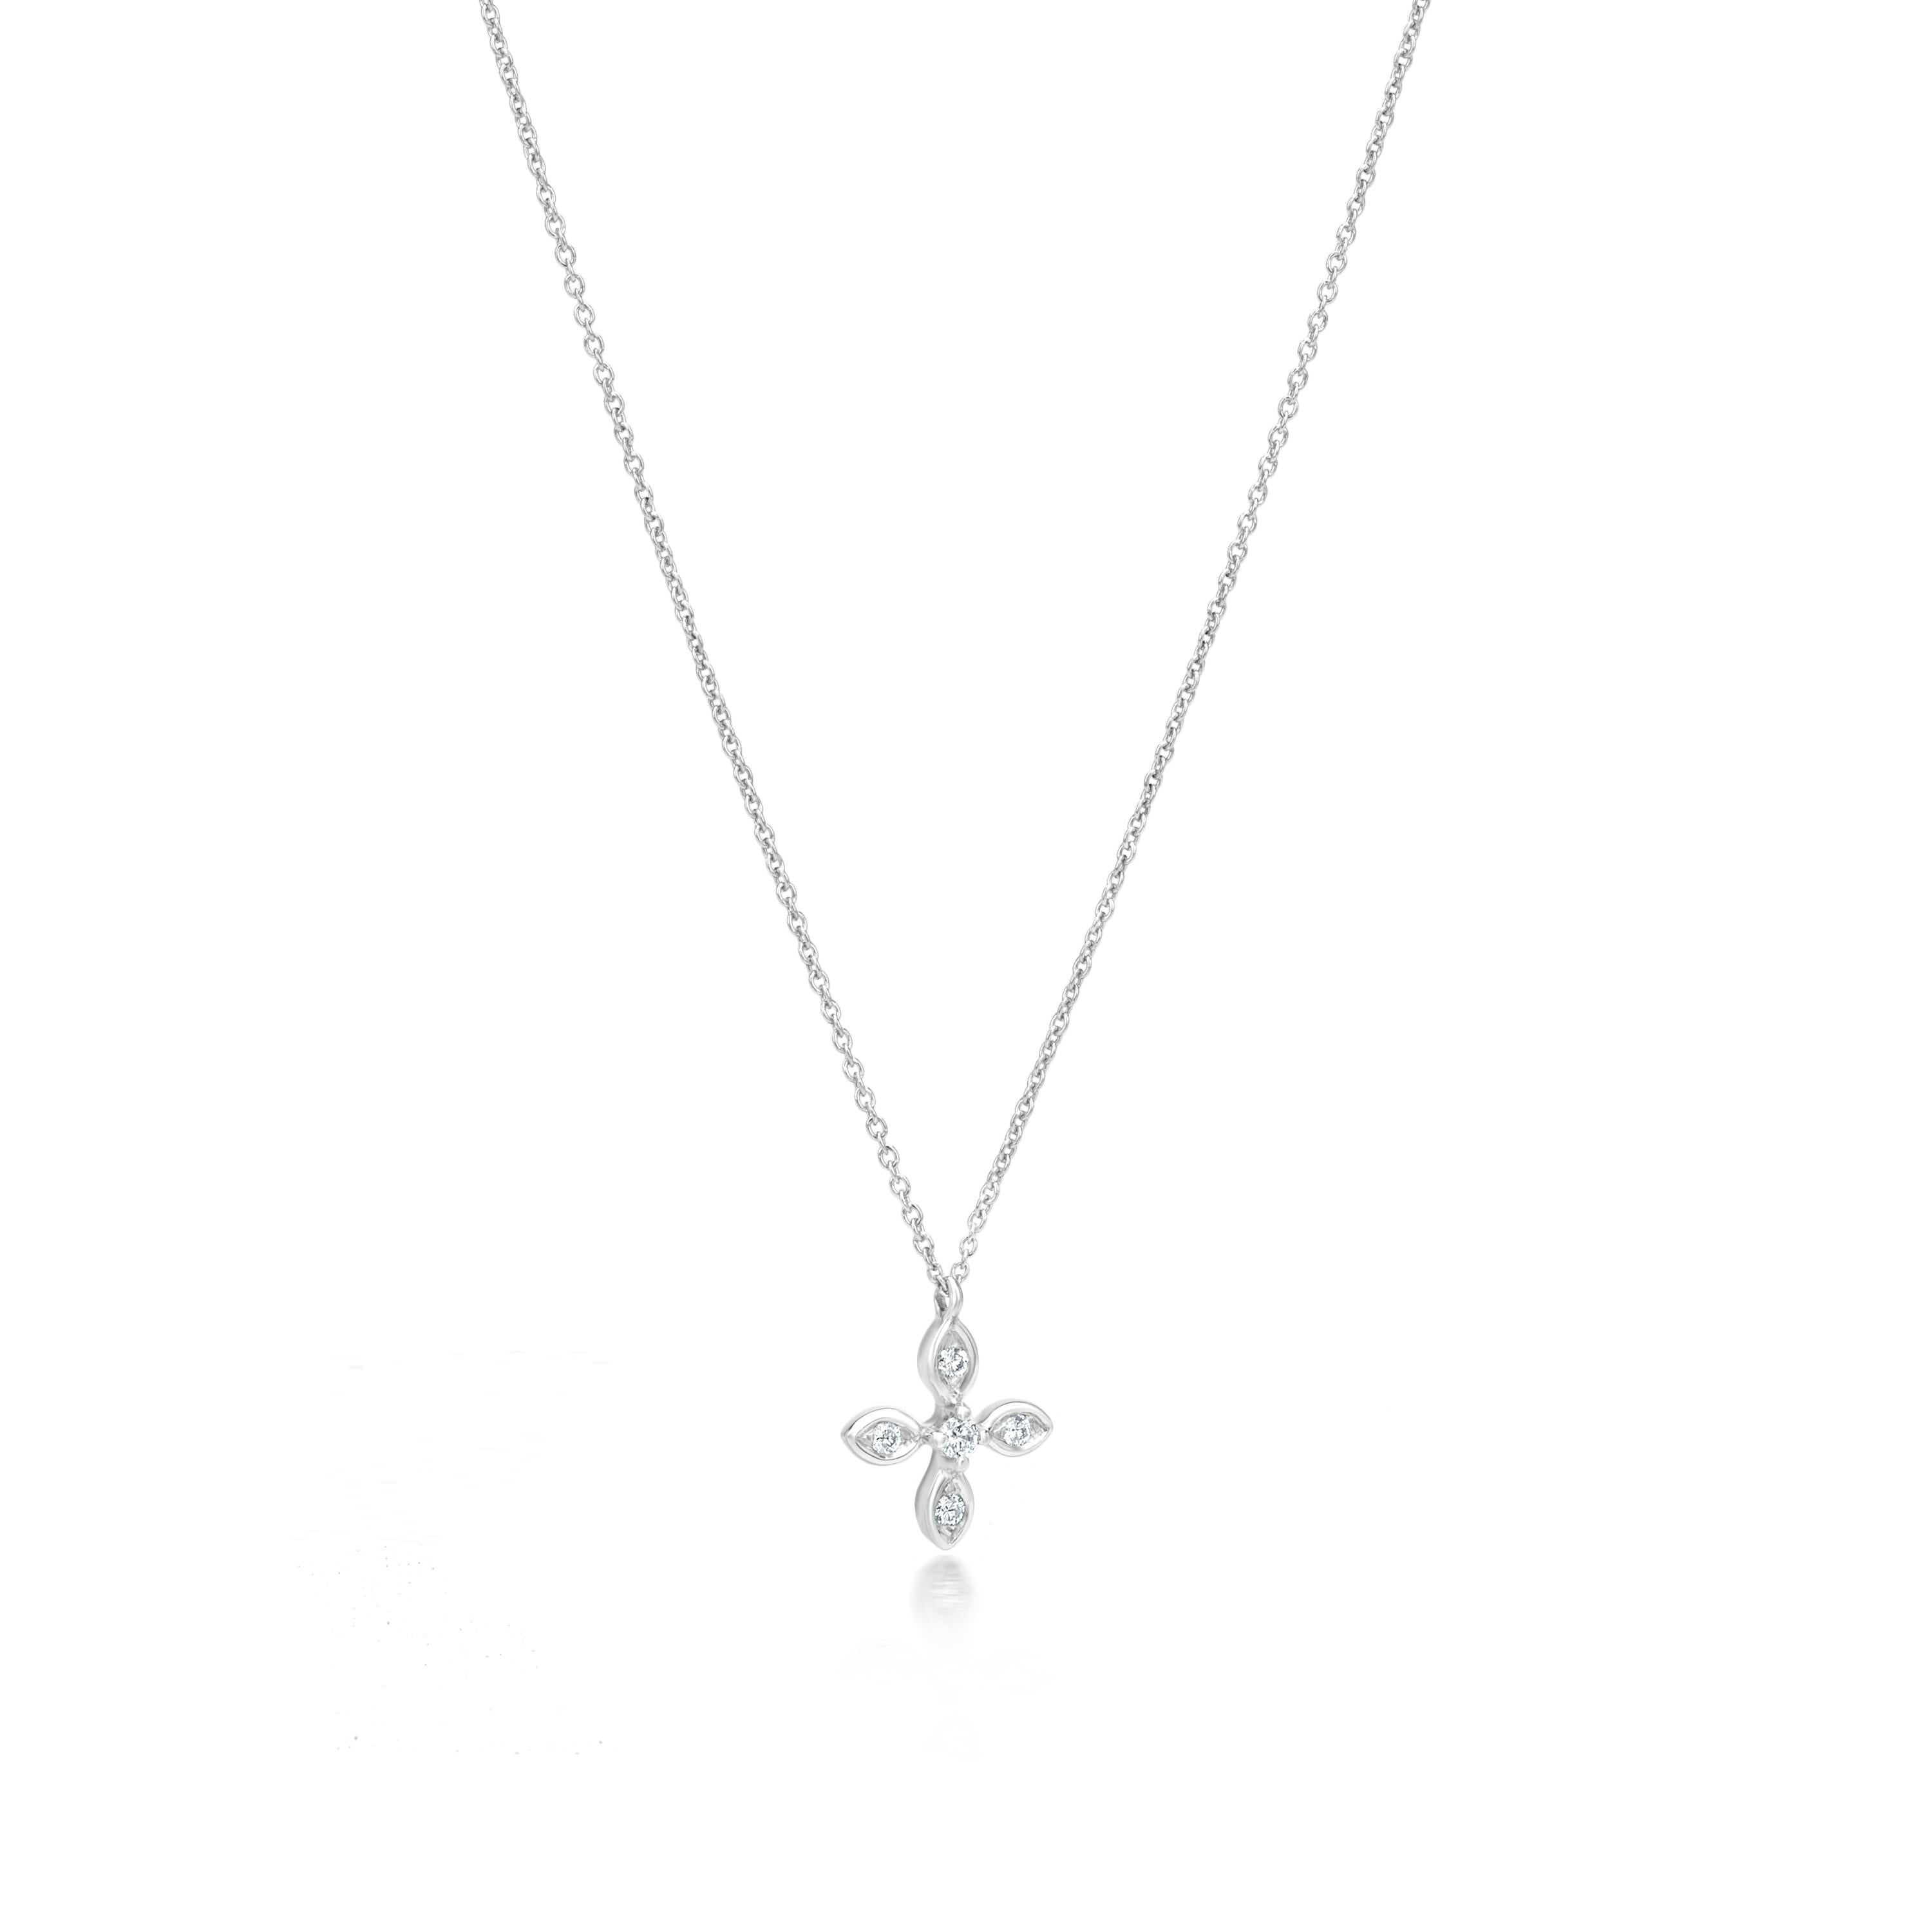 Round Cut Luxle Diamond Four Leaf Pendant Necklace in 18k White Gold